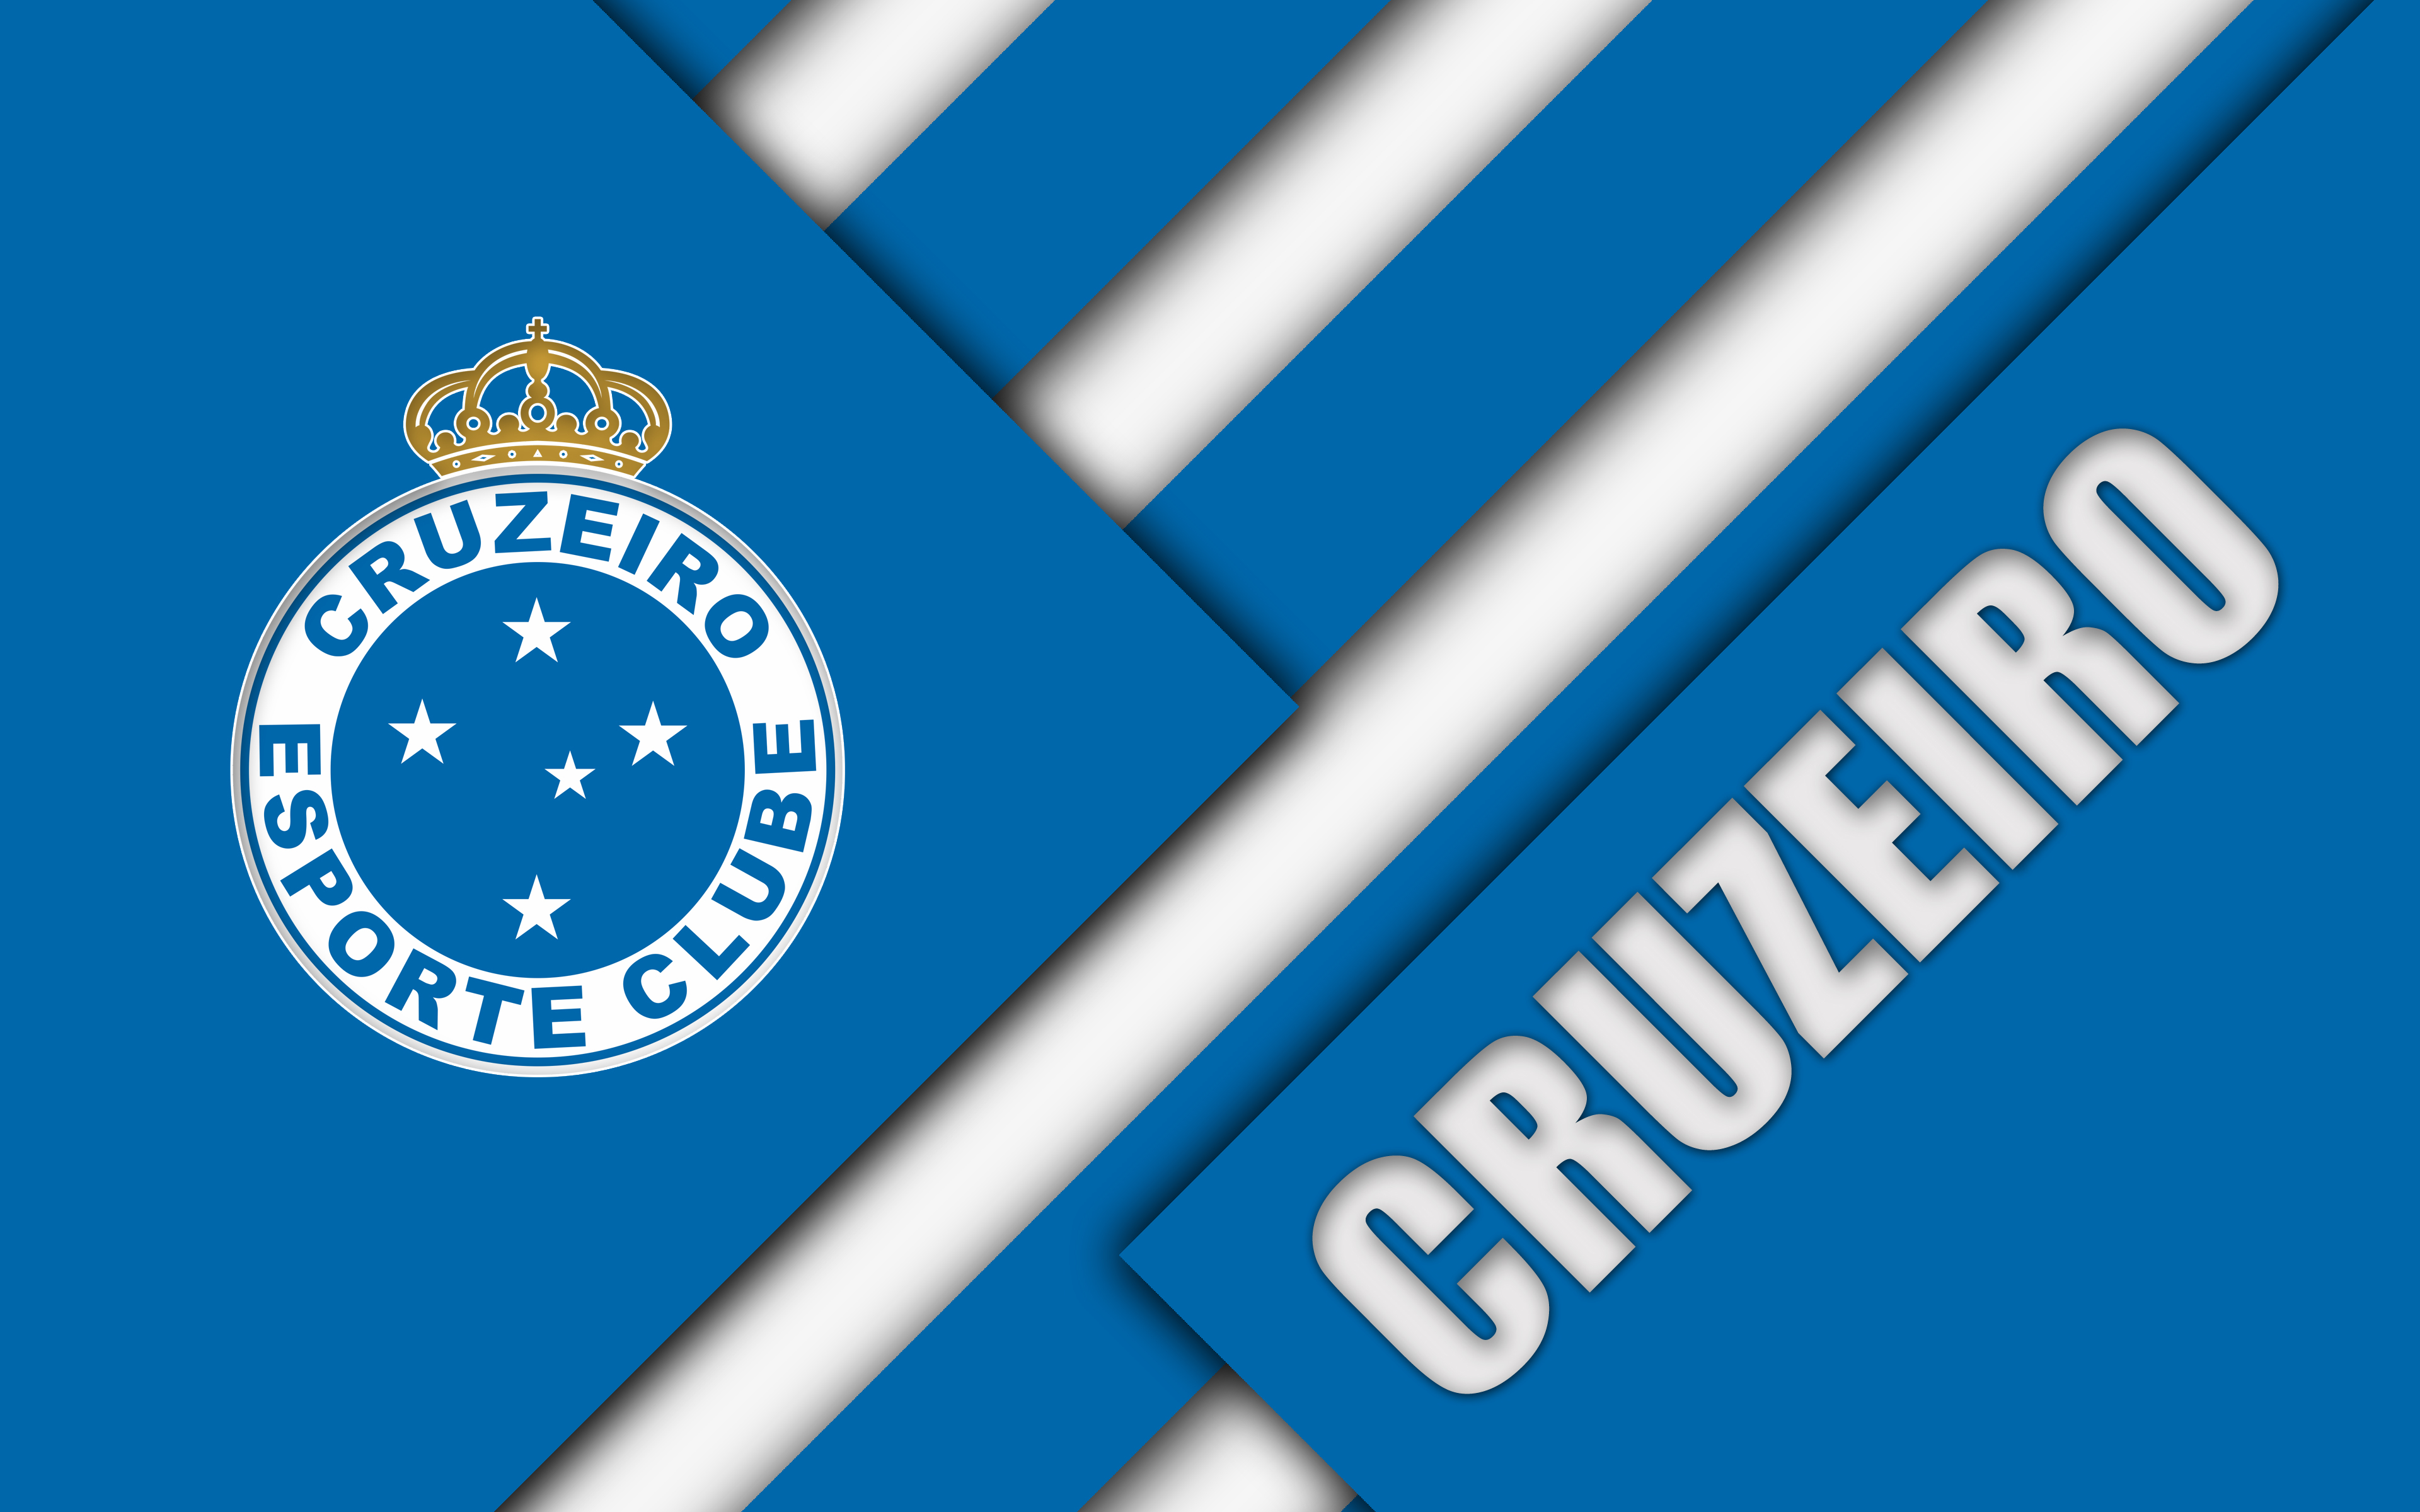 Cruzeiro Esporte Clube 4k Ultra HD Wallpaper | Background Image